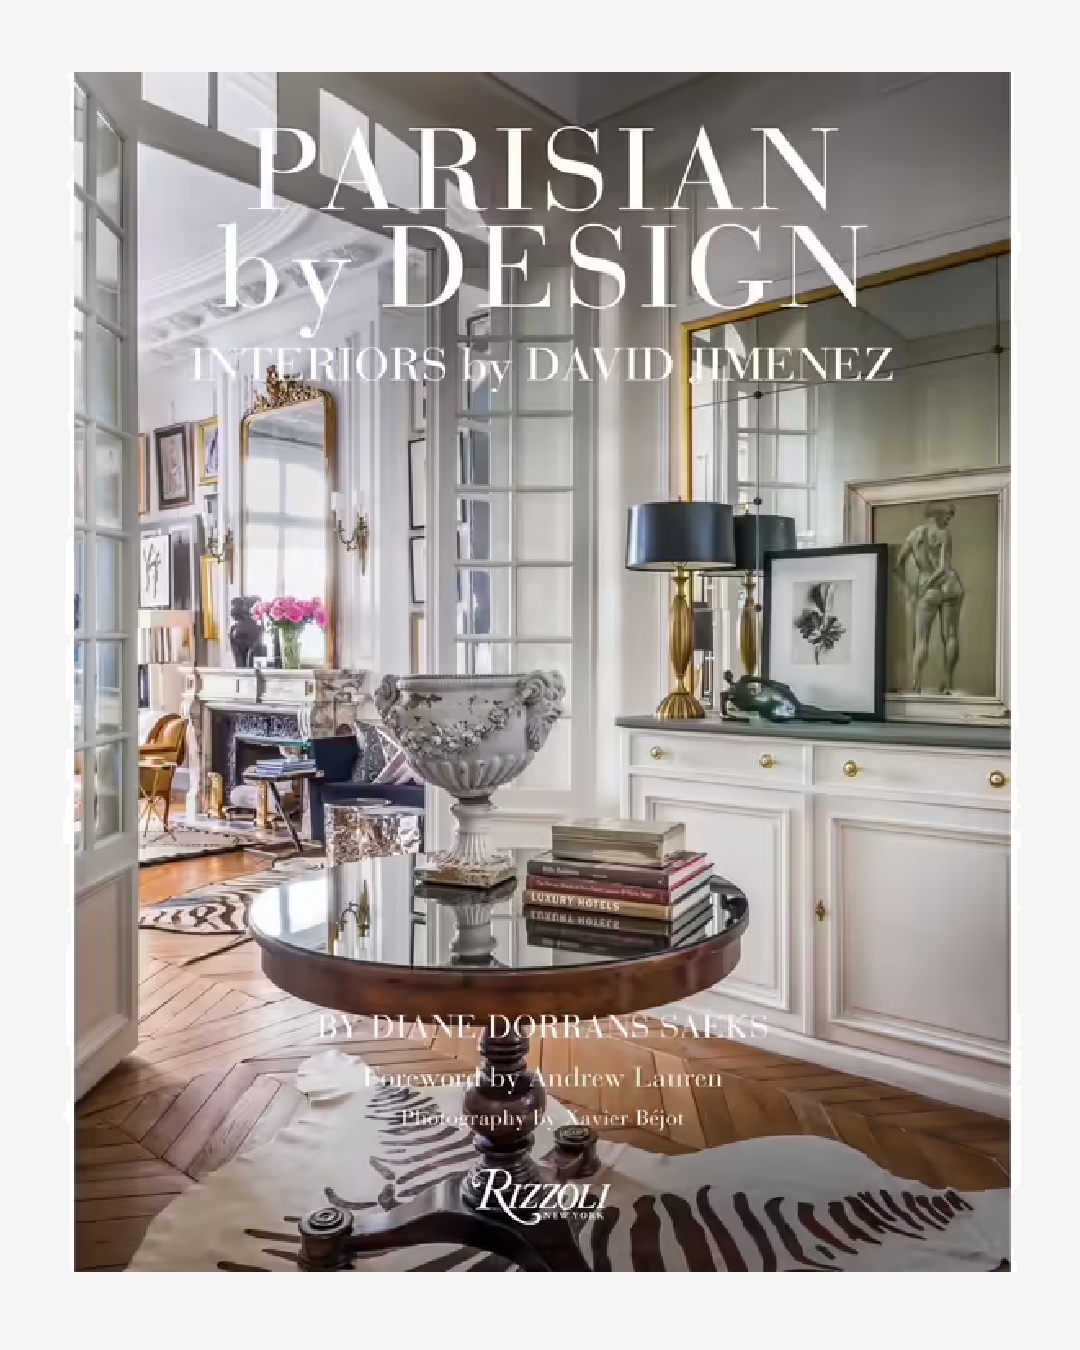 Parisian by design hardcover book